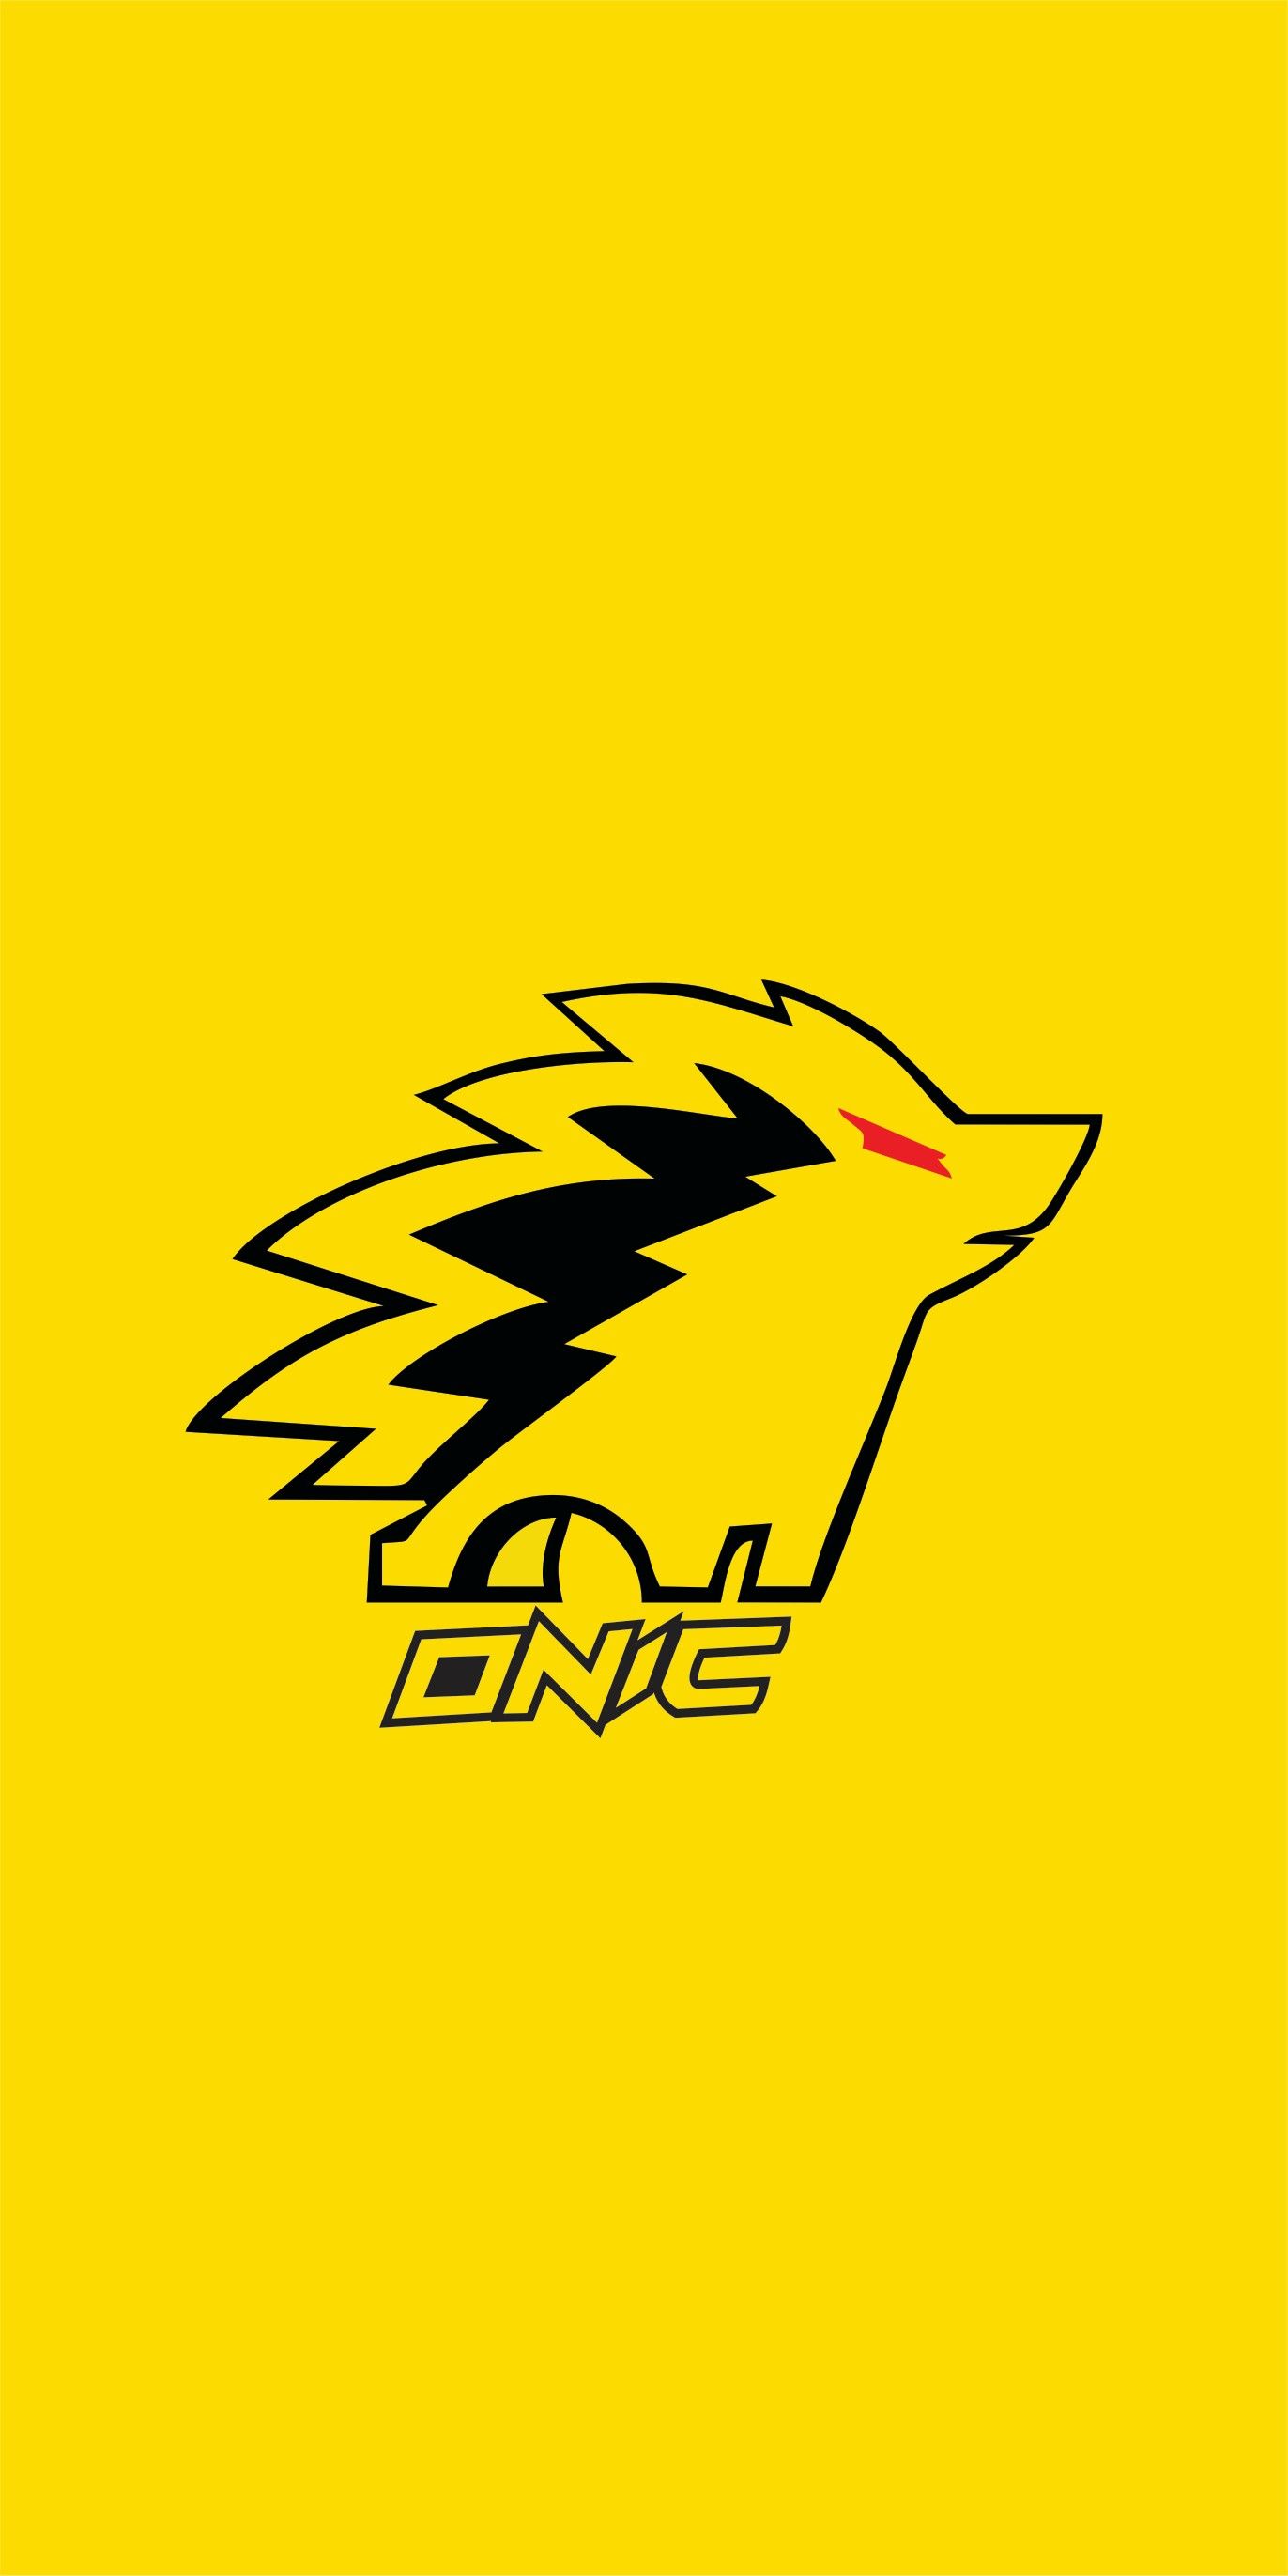 Onic E Sport Logo2. Gambar Tulisan Tangan, Ilustrasi Naga, Wallpaper Medis